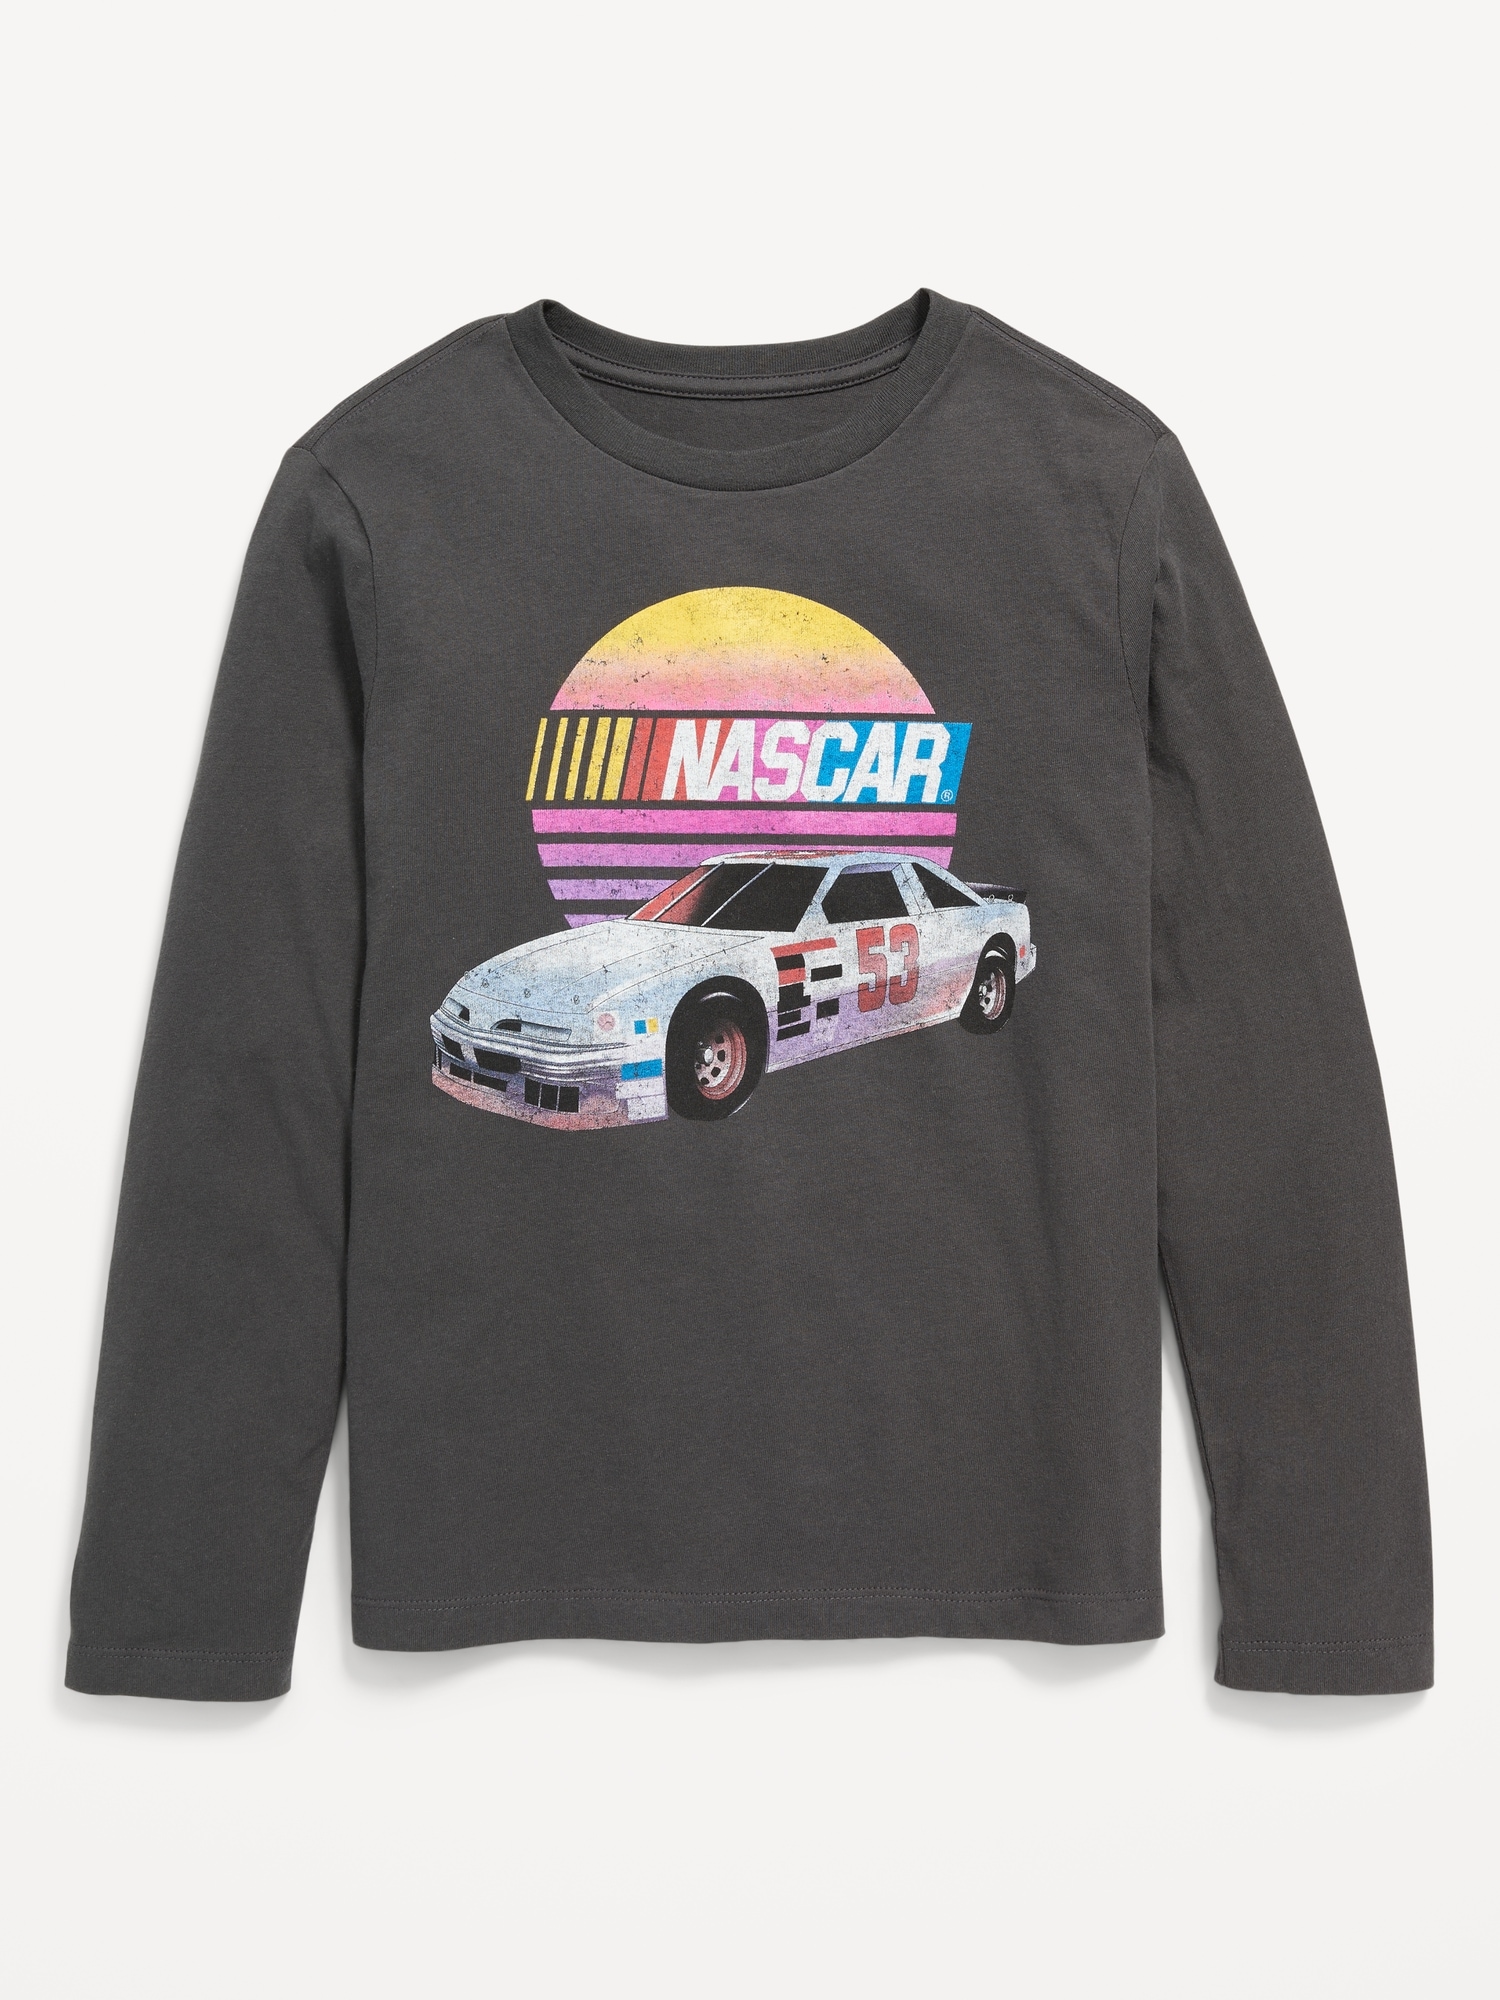 Long-Sleeve Gender-Neutral NASCAR Graphic T-Shirt for Kids